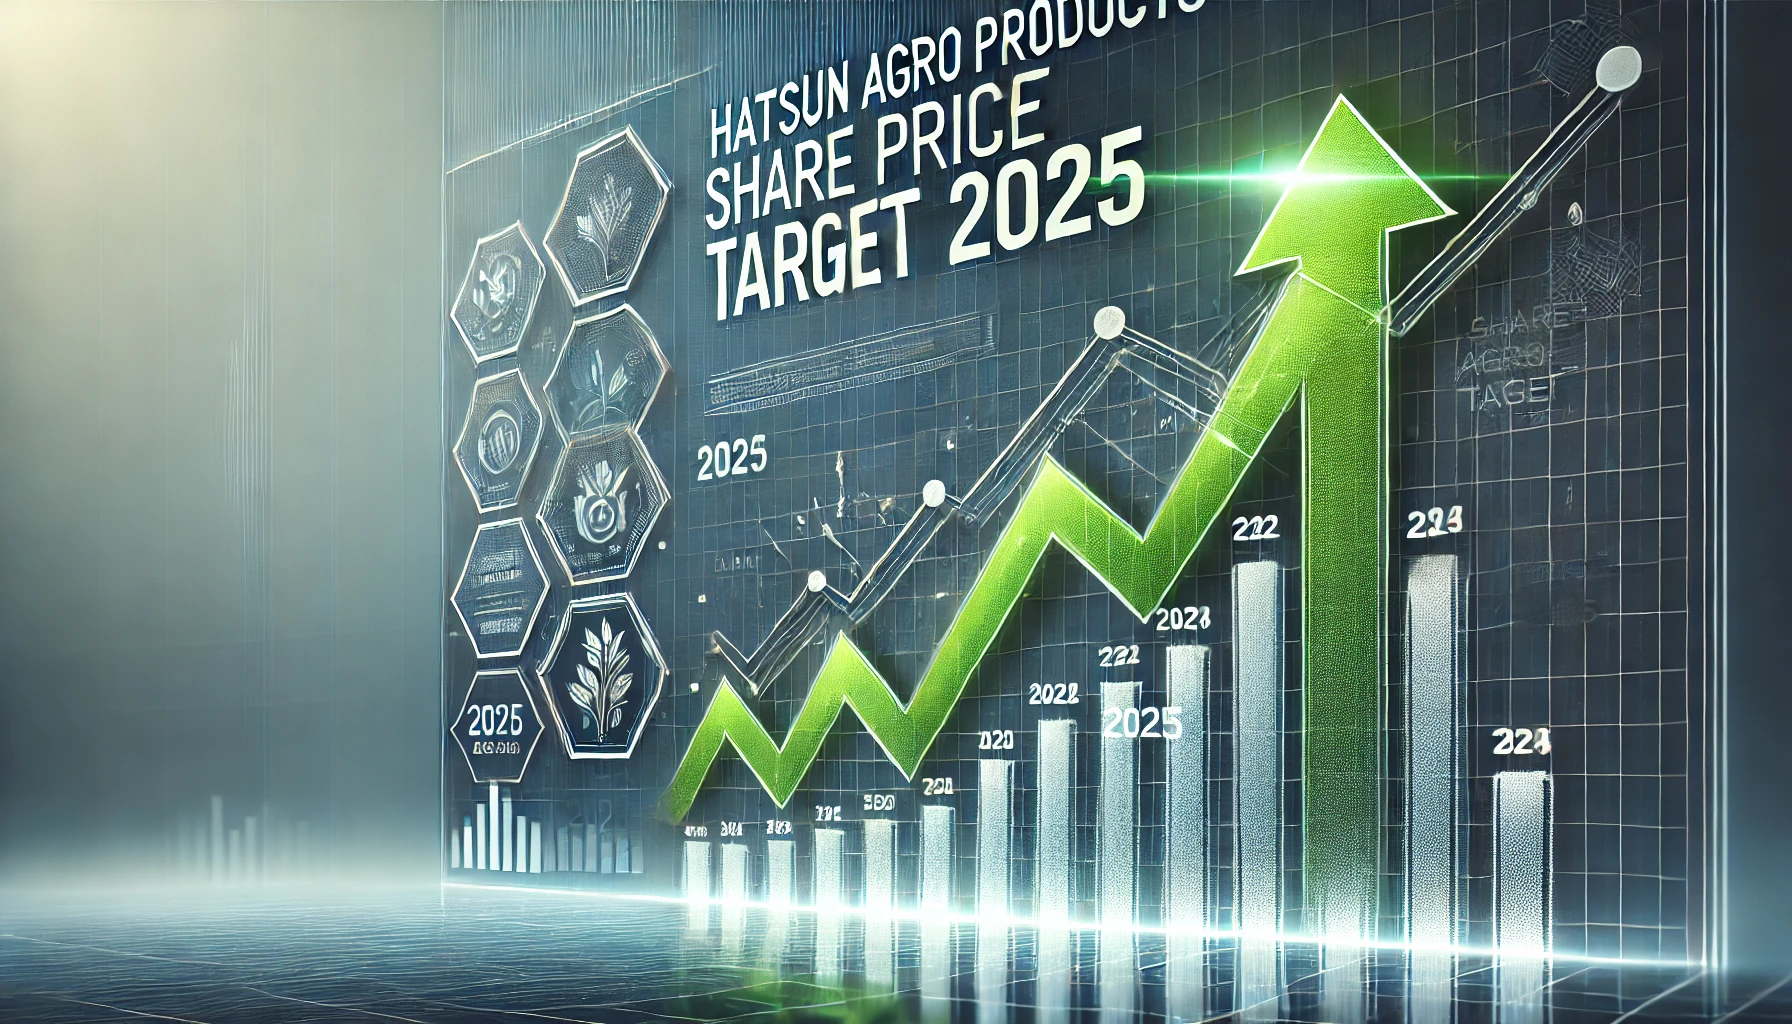 Hatsun Agro Products Share Price Target 2025, 2026, 2028, 2030, 2035 | हैटसन एग्रो प्रोडक्ट्स शेयर प्राइस टारगेट 2025, 2026, 2028, 2030